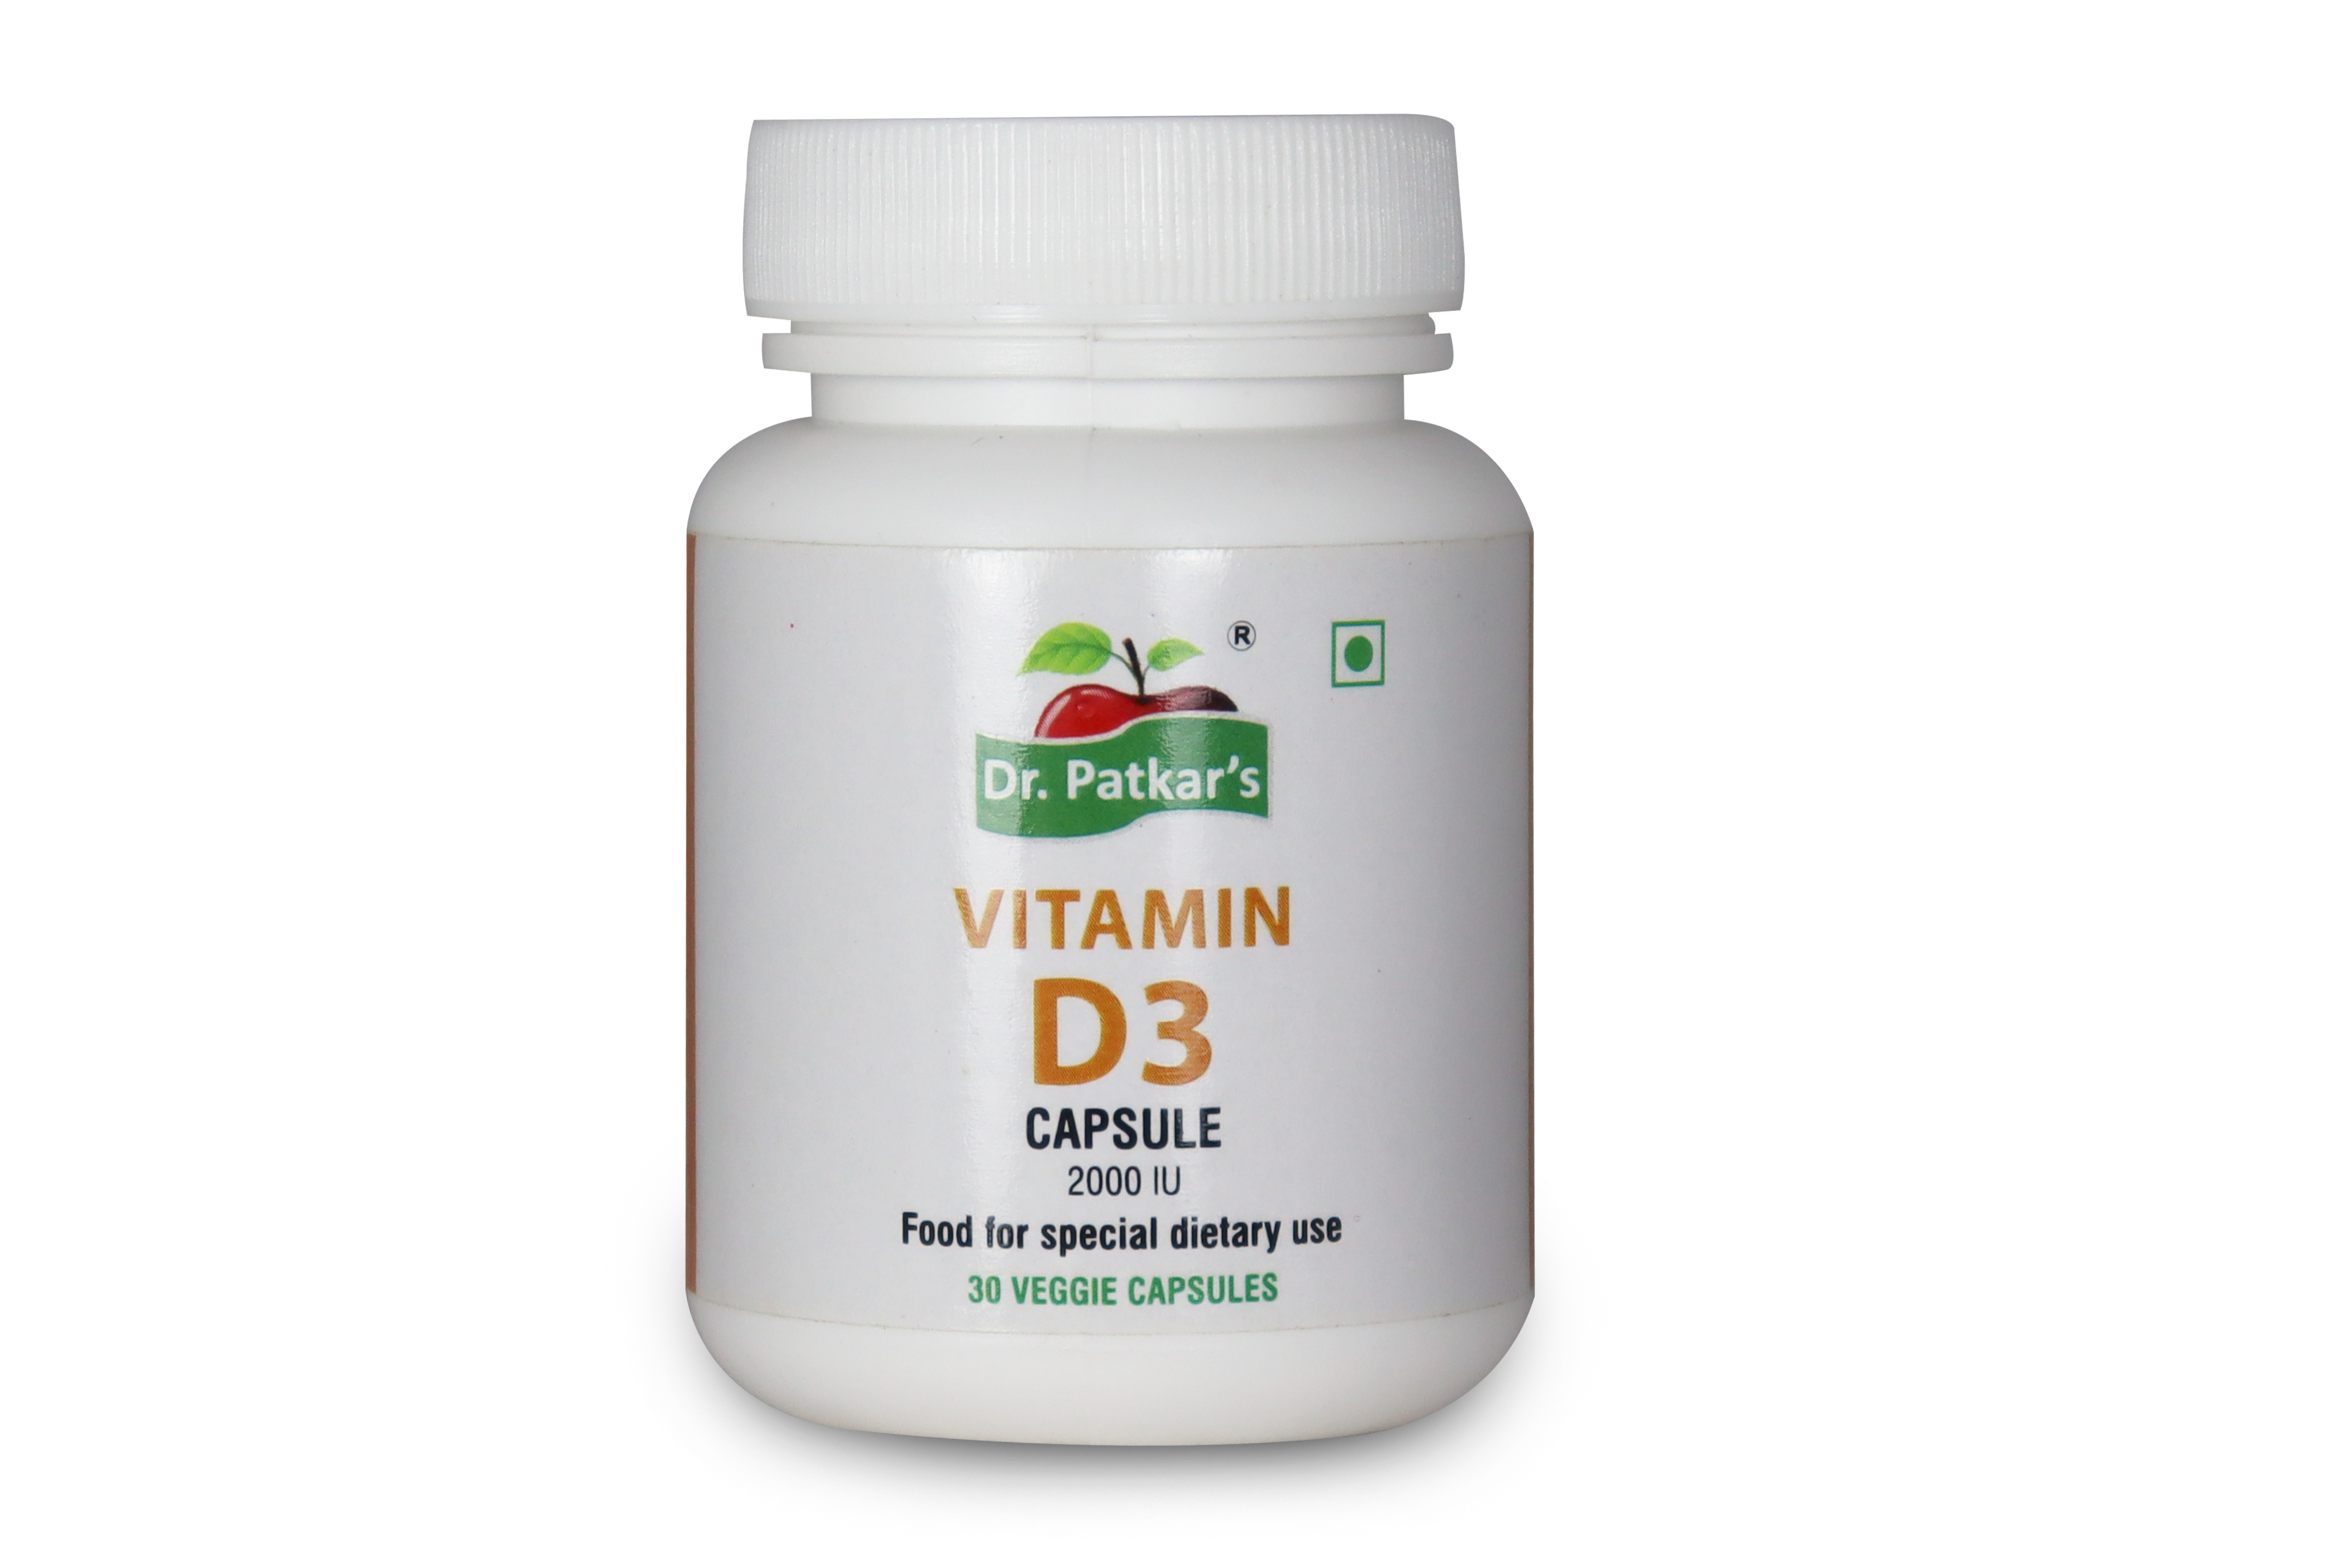 Buy Dr. Patkar's Vitamin D3 at Best Price Online